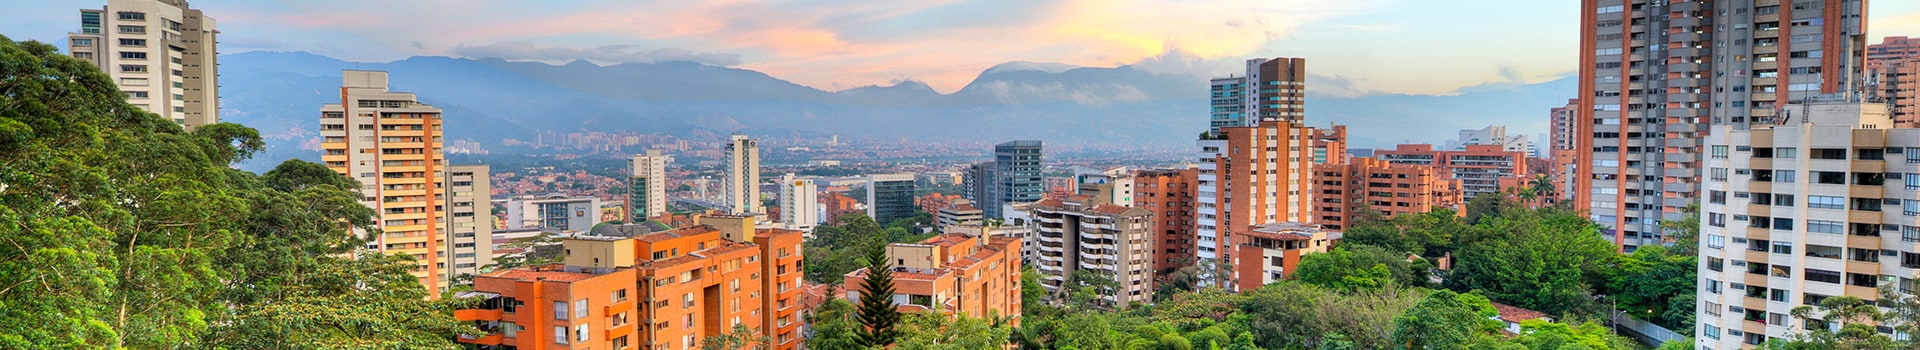 Bogotá - Medellín - jose marie cordova